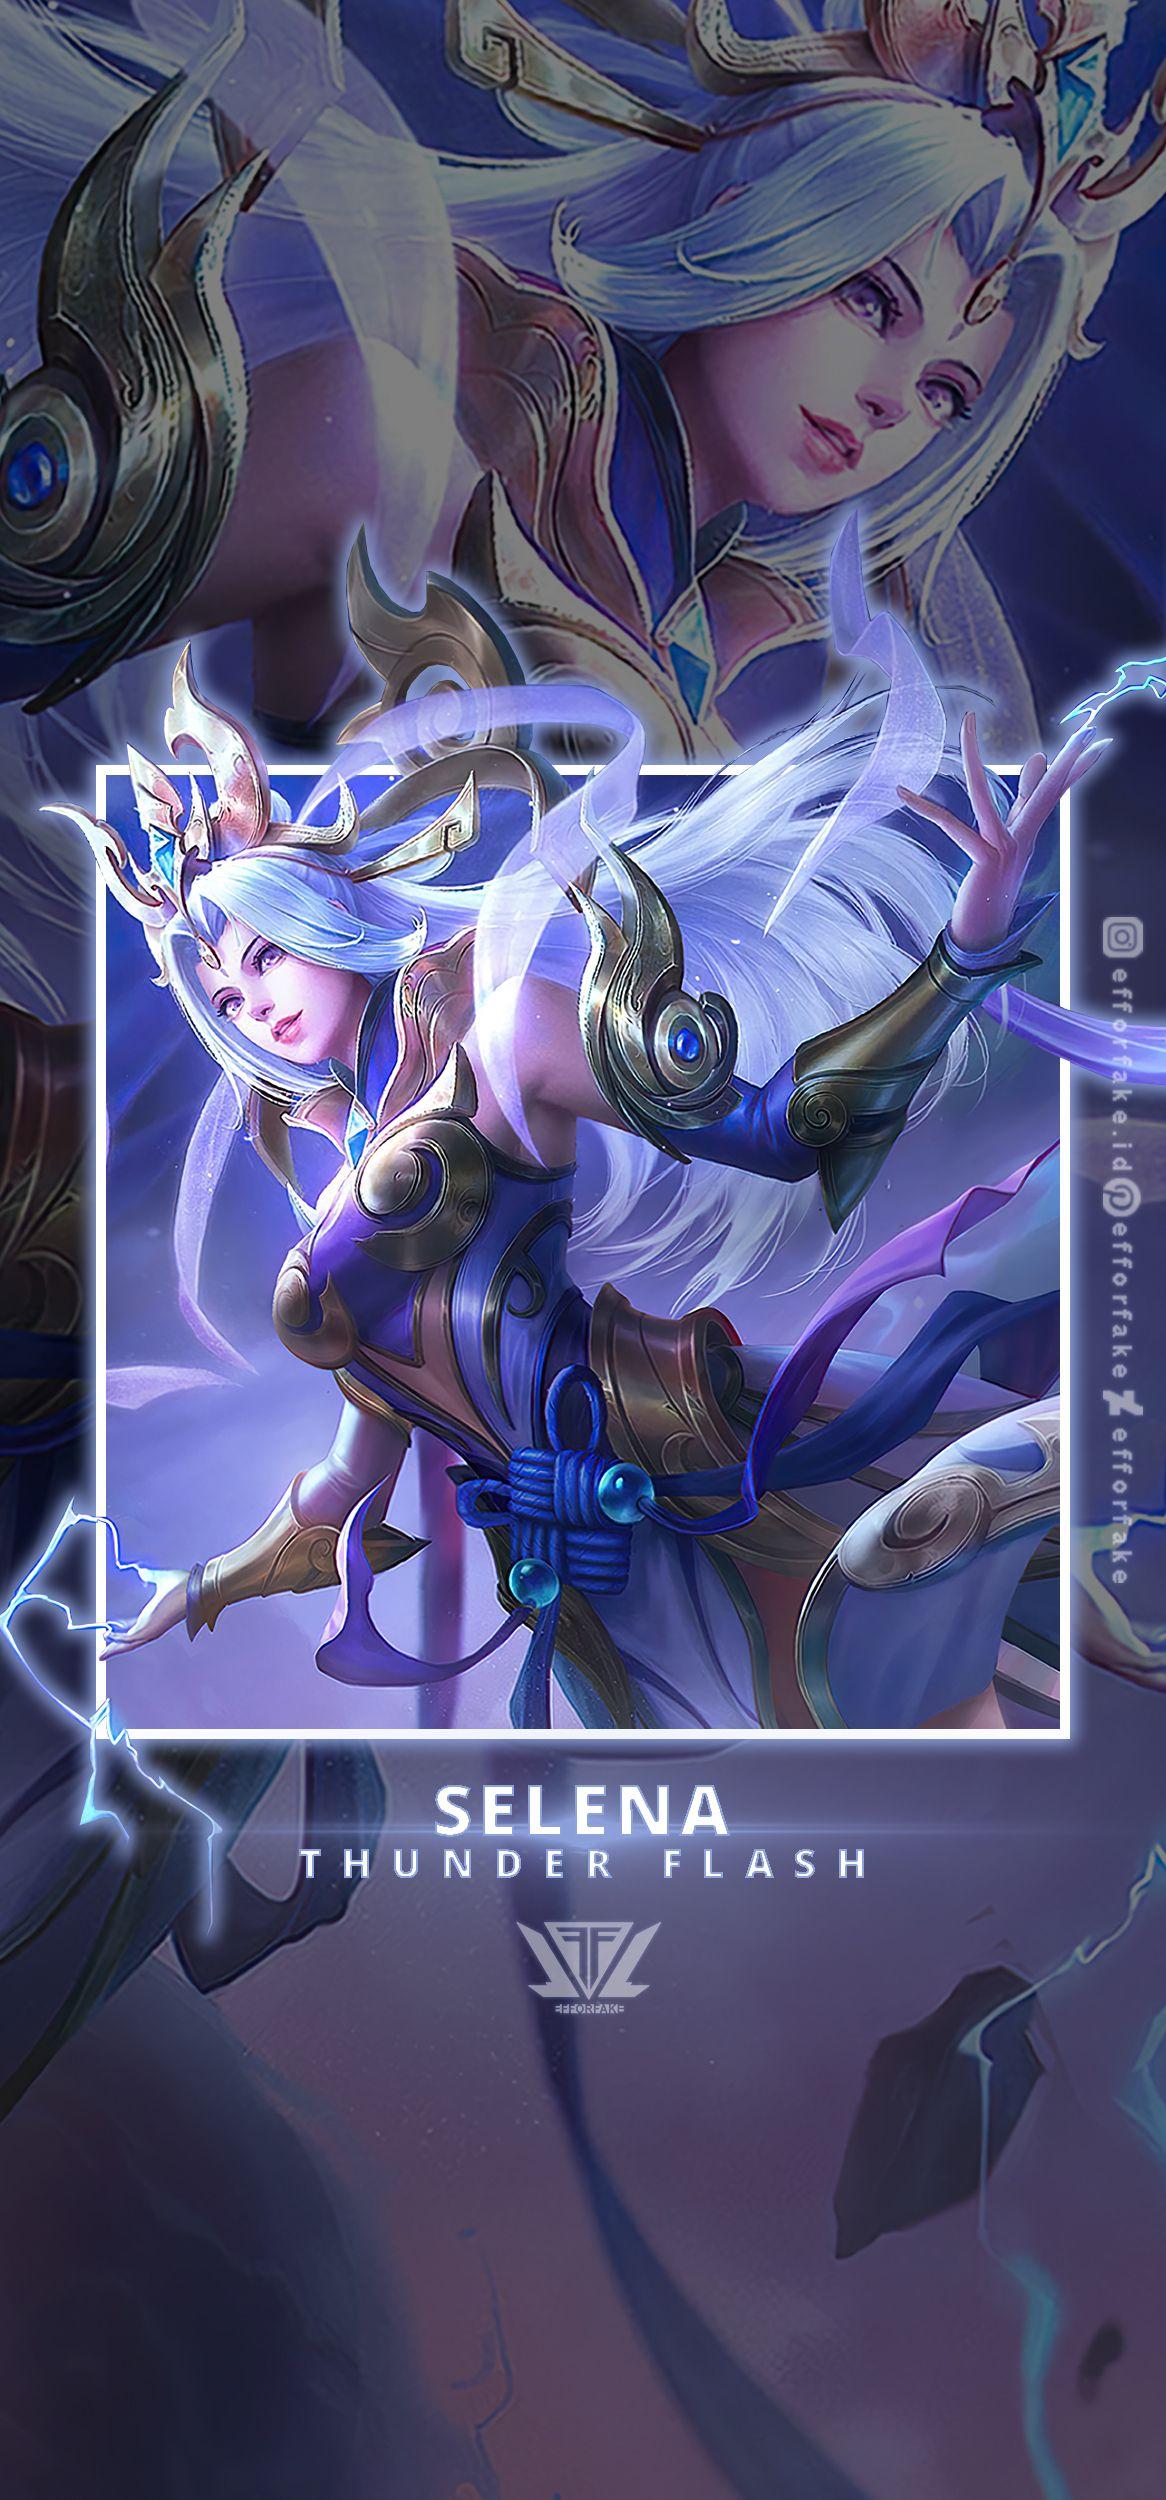 Selena Lady Vengeance Skin Mobile Legends Wallpaper iPhone Phone 4K 6621e